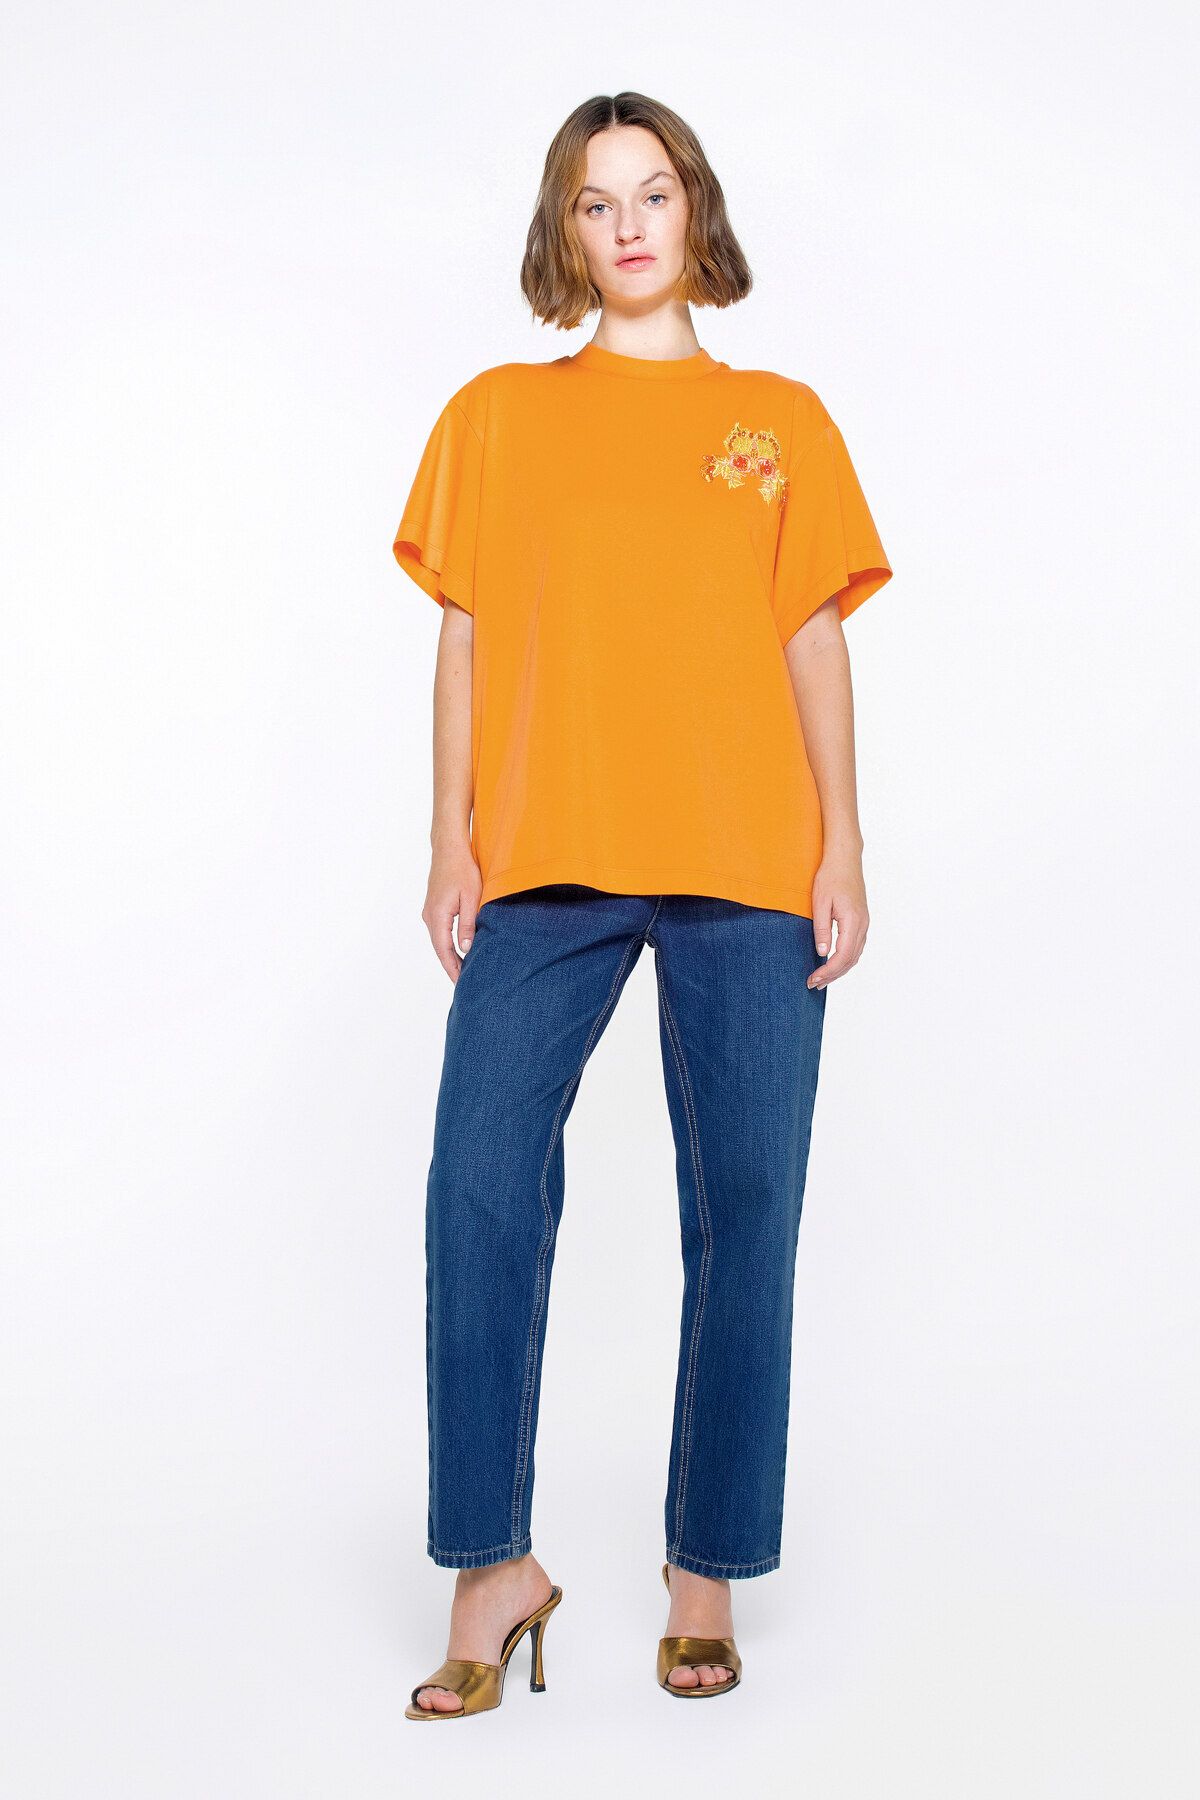 GIZIA تی شرت ساده نارنجی با جزئیات گلدوزی کاربردی